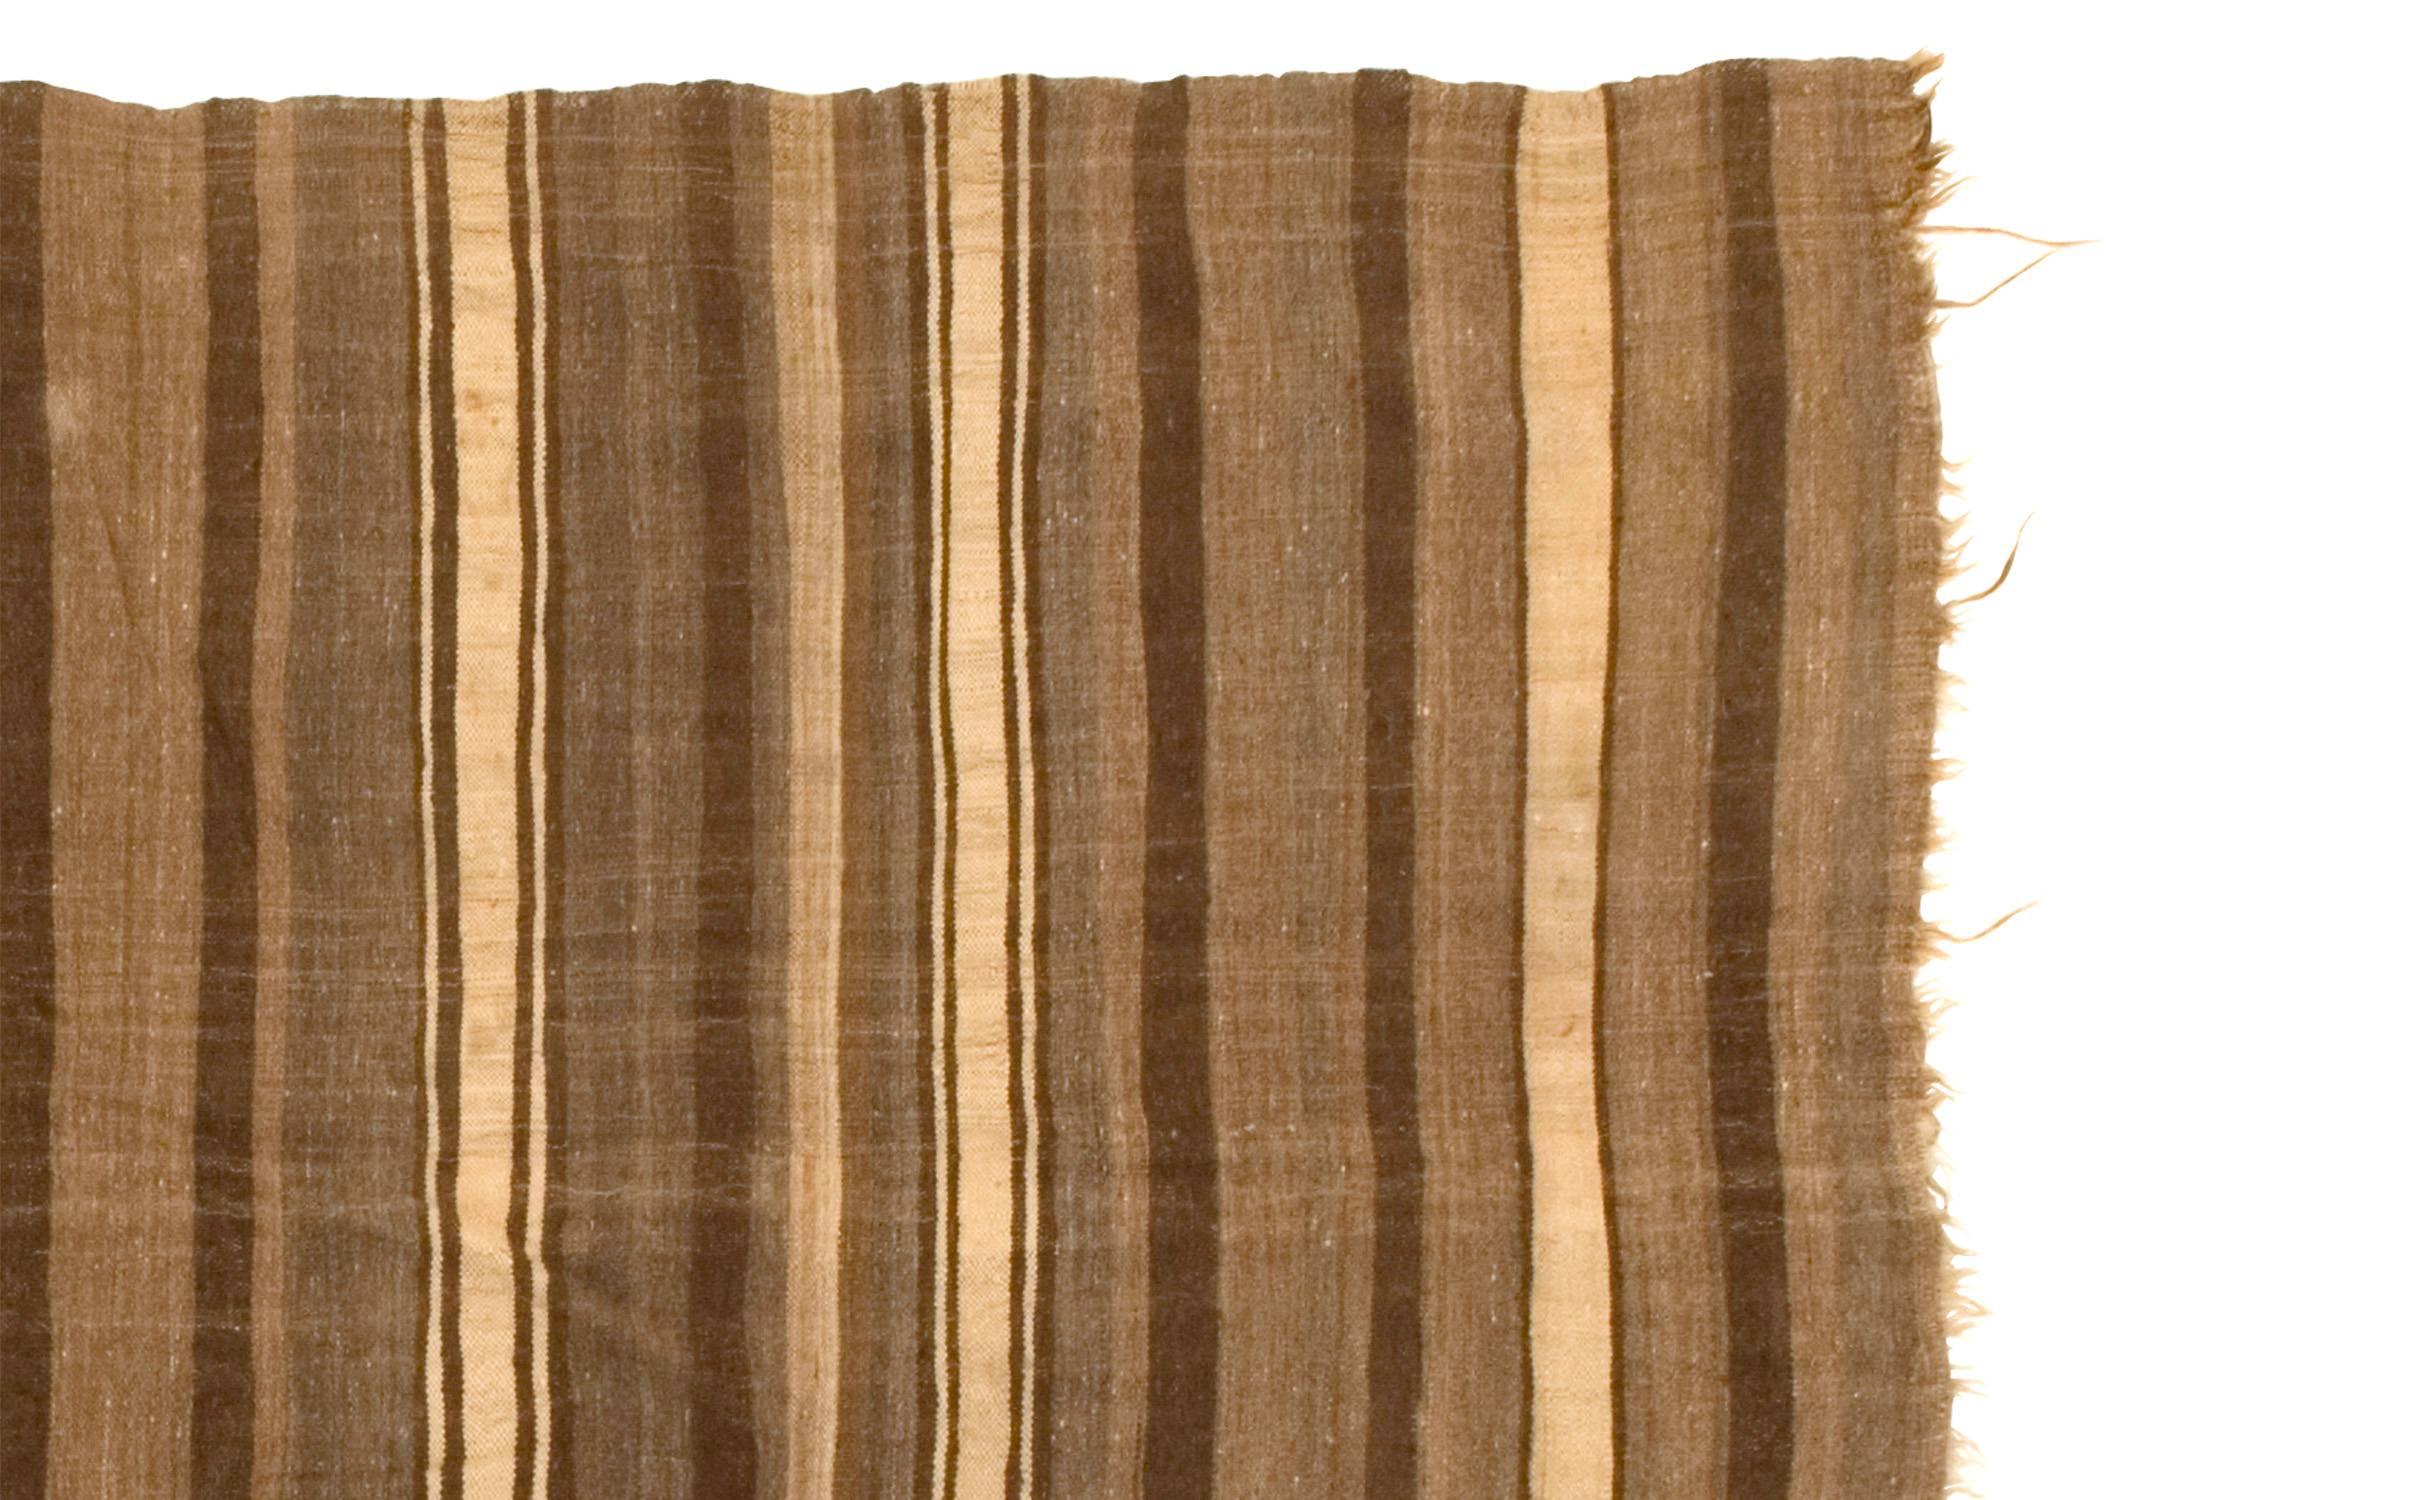 • One of a kind flat-weave blanket
• 100% lightweight wool
• Measures: 7'4